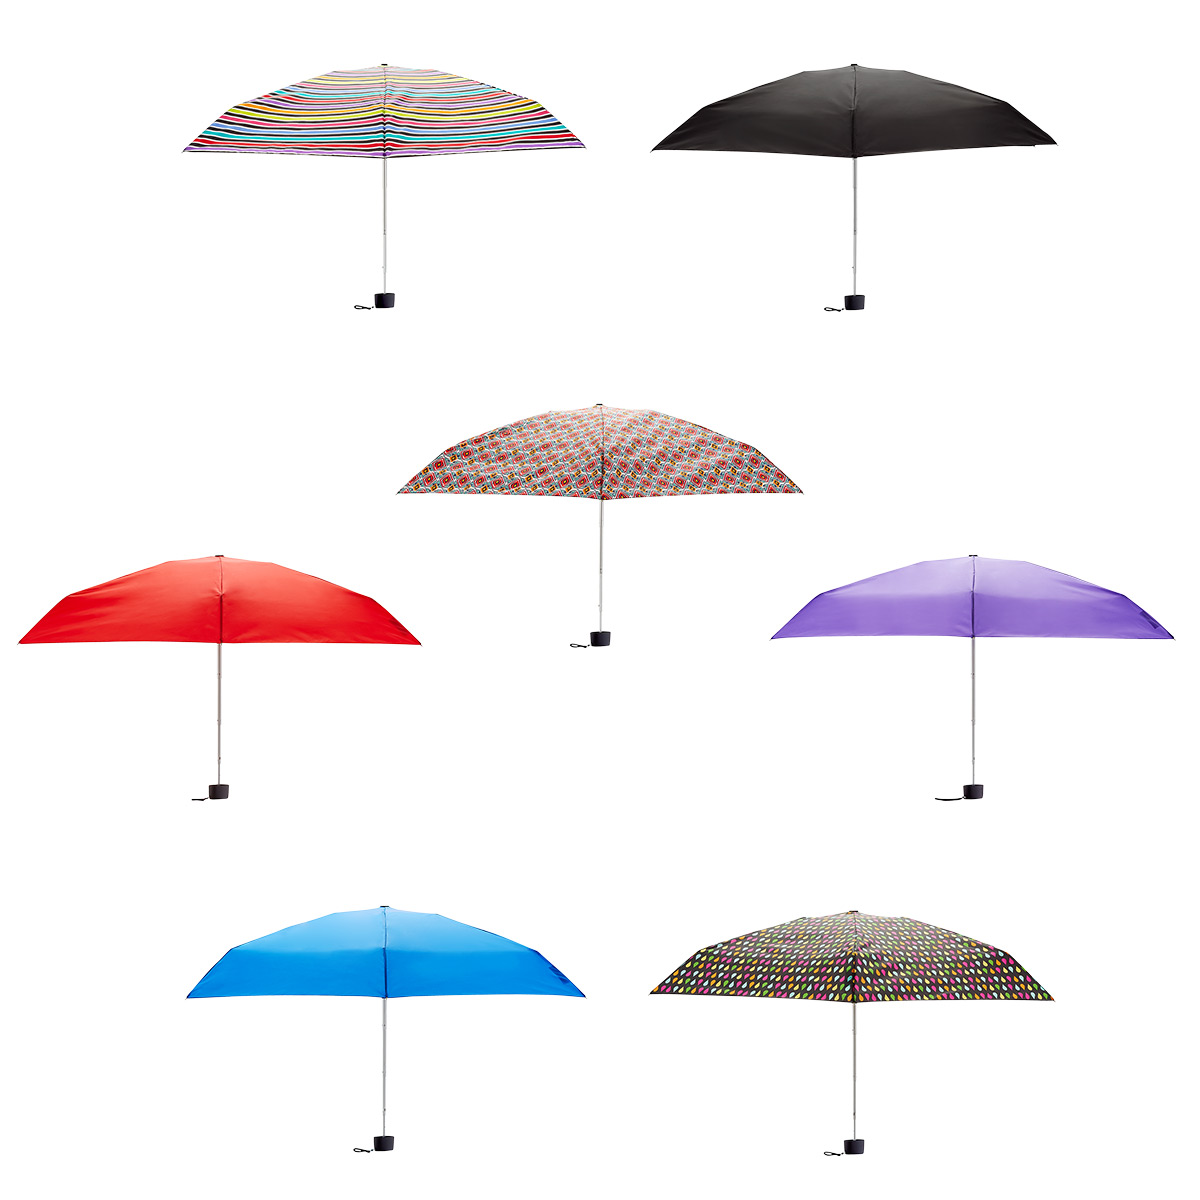 totes slimline travel umbrella